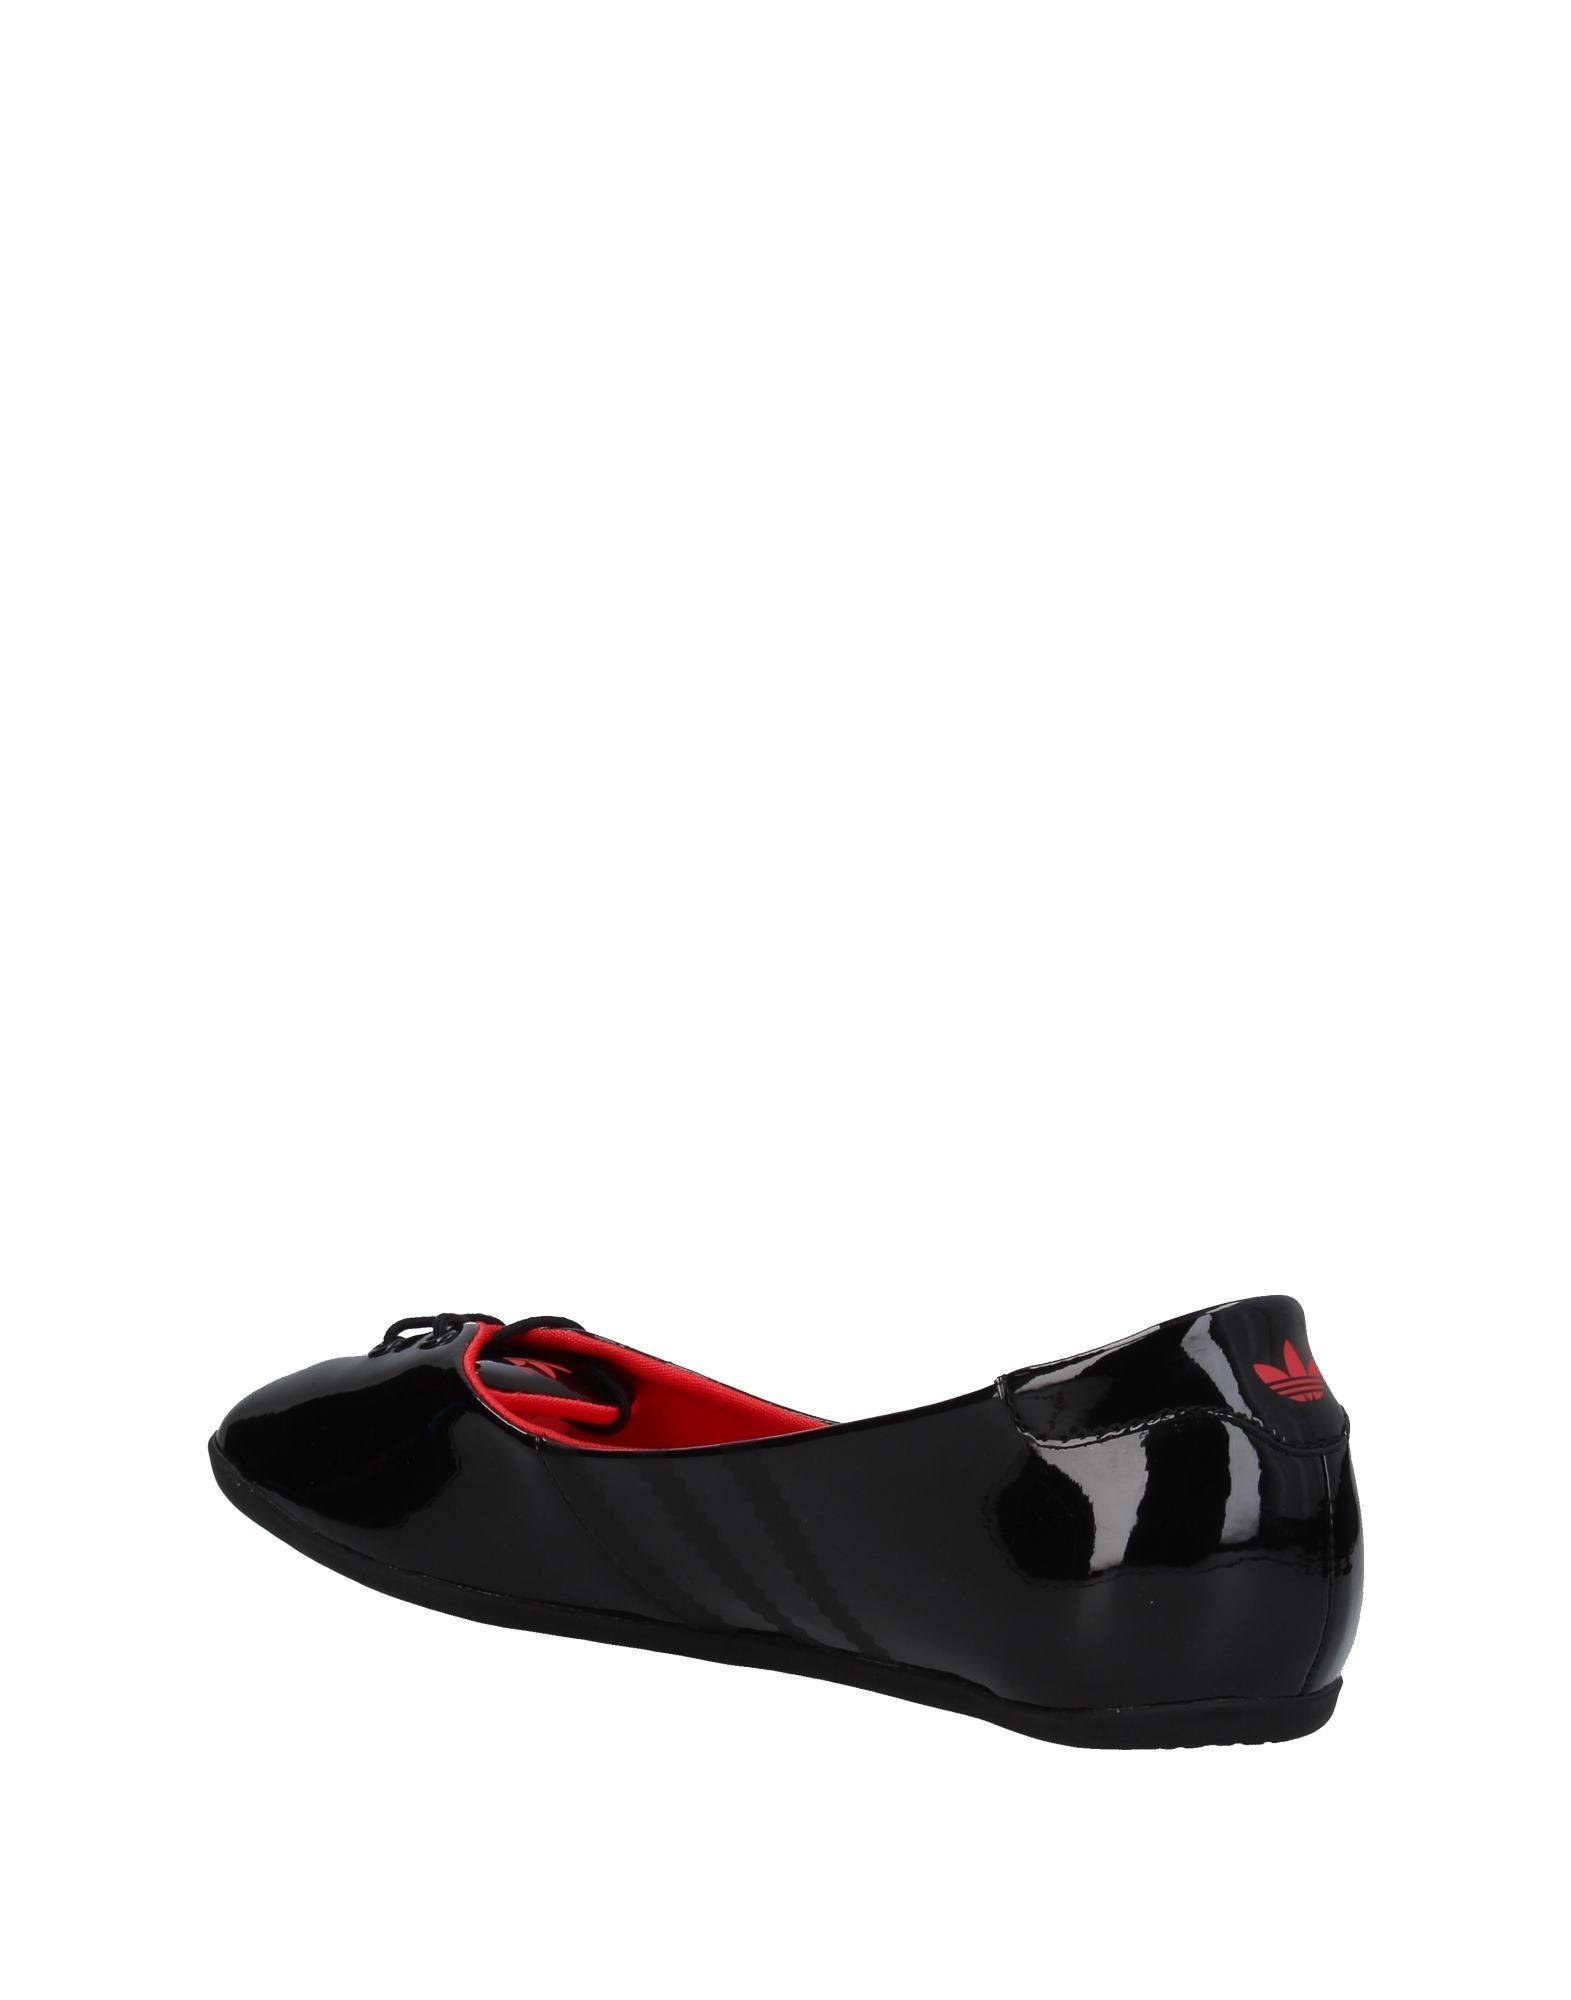 adidas Originals Leather Ballet Flats in Black | Lyst